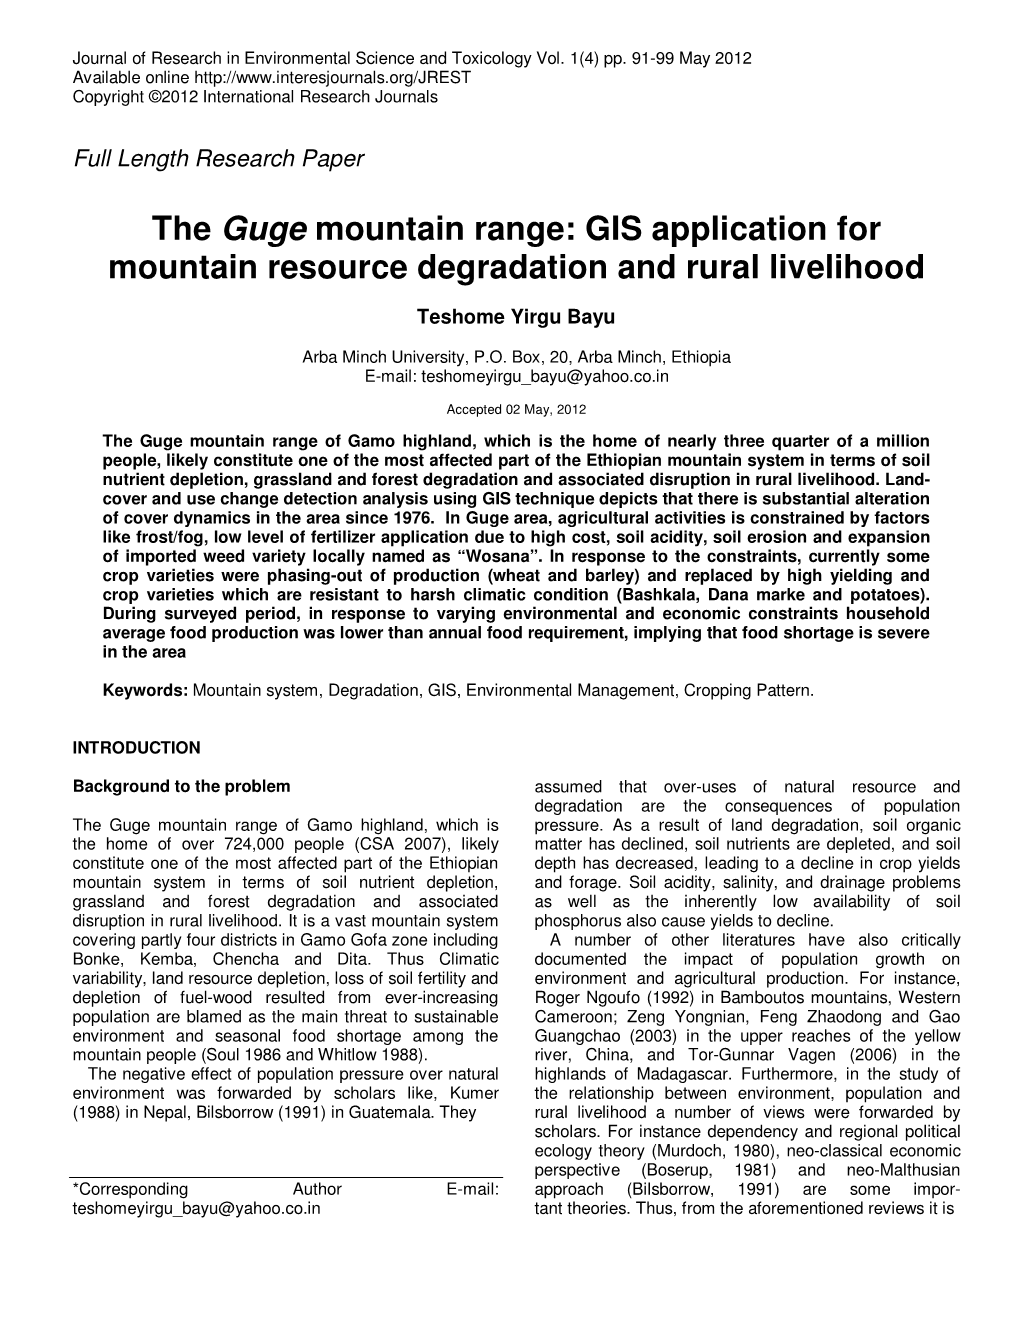 The Guge Mountain Range: GIS Application for Mountain Resource Degradation and Rural Livelihood